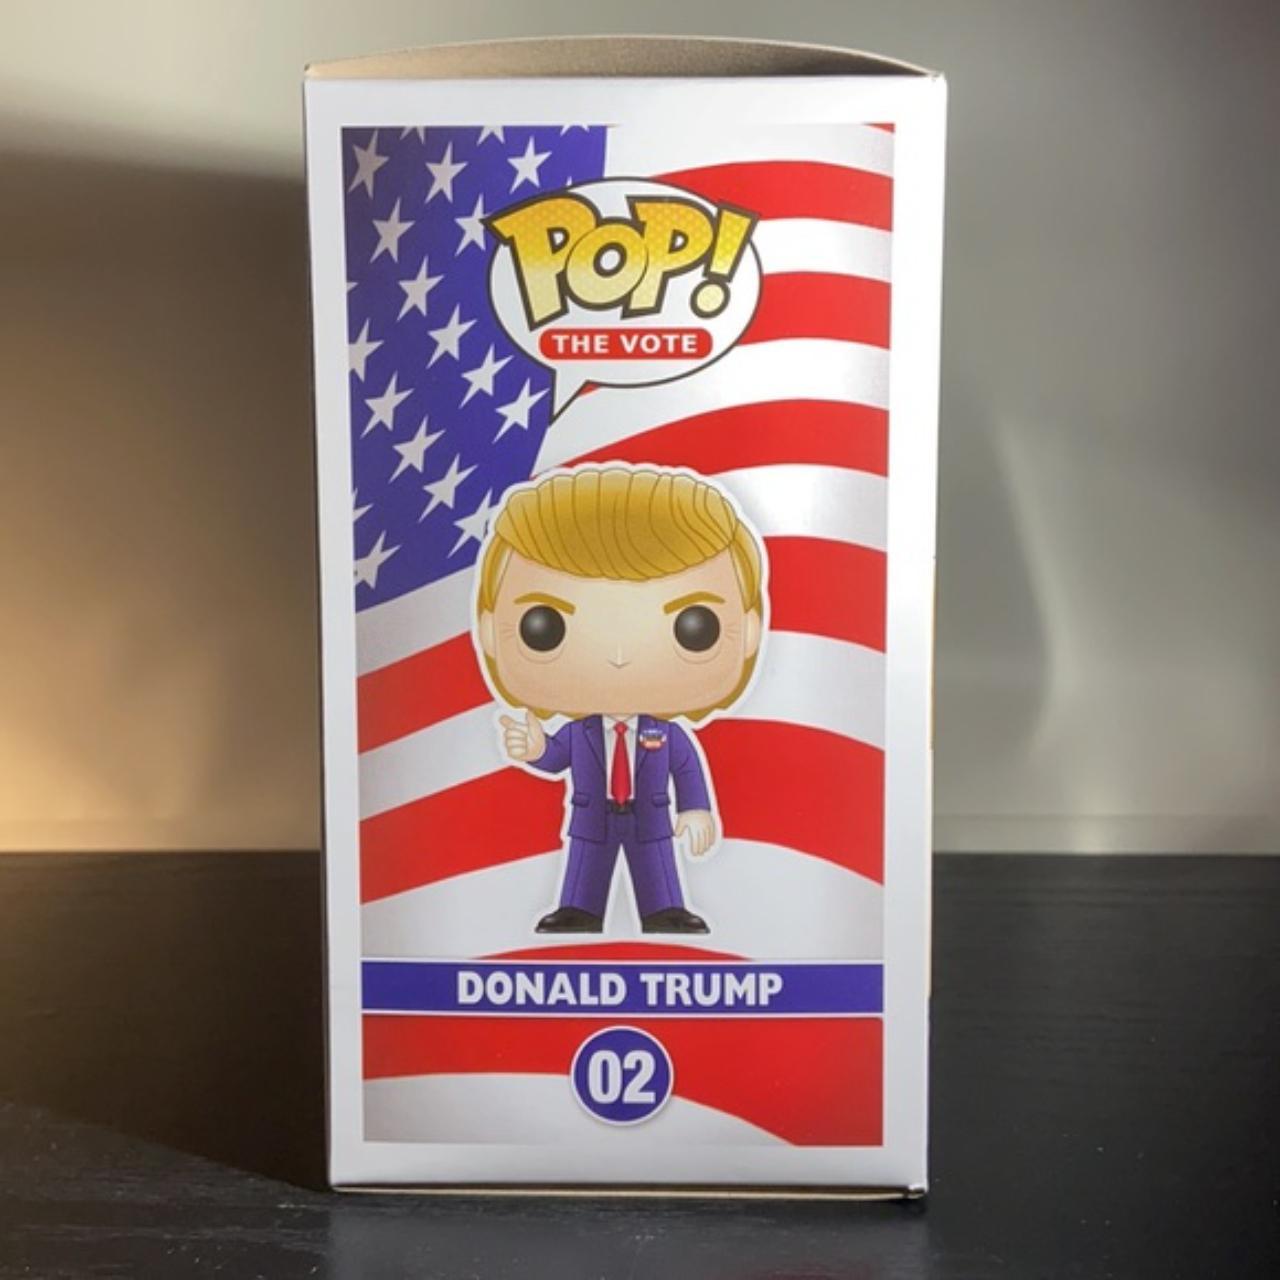 Product Image 2 - Donald Trump
Type: Vinyl Art Toys
Brand: